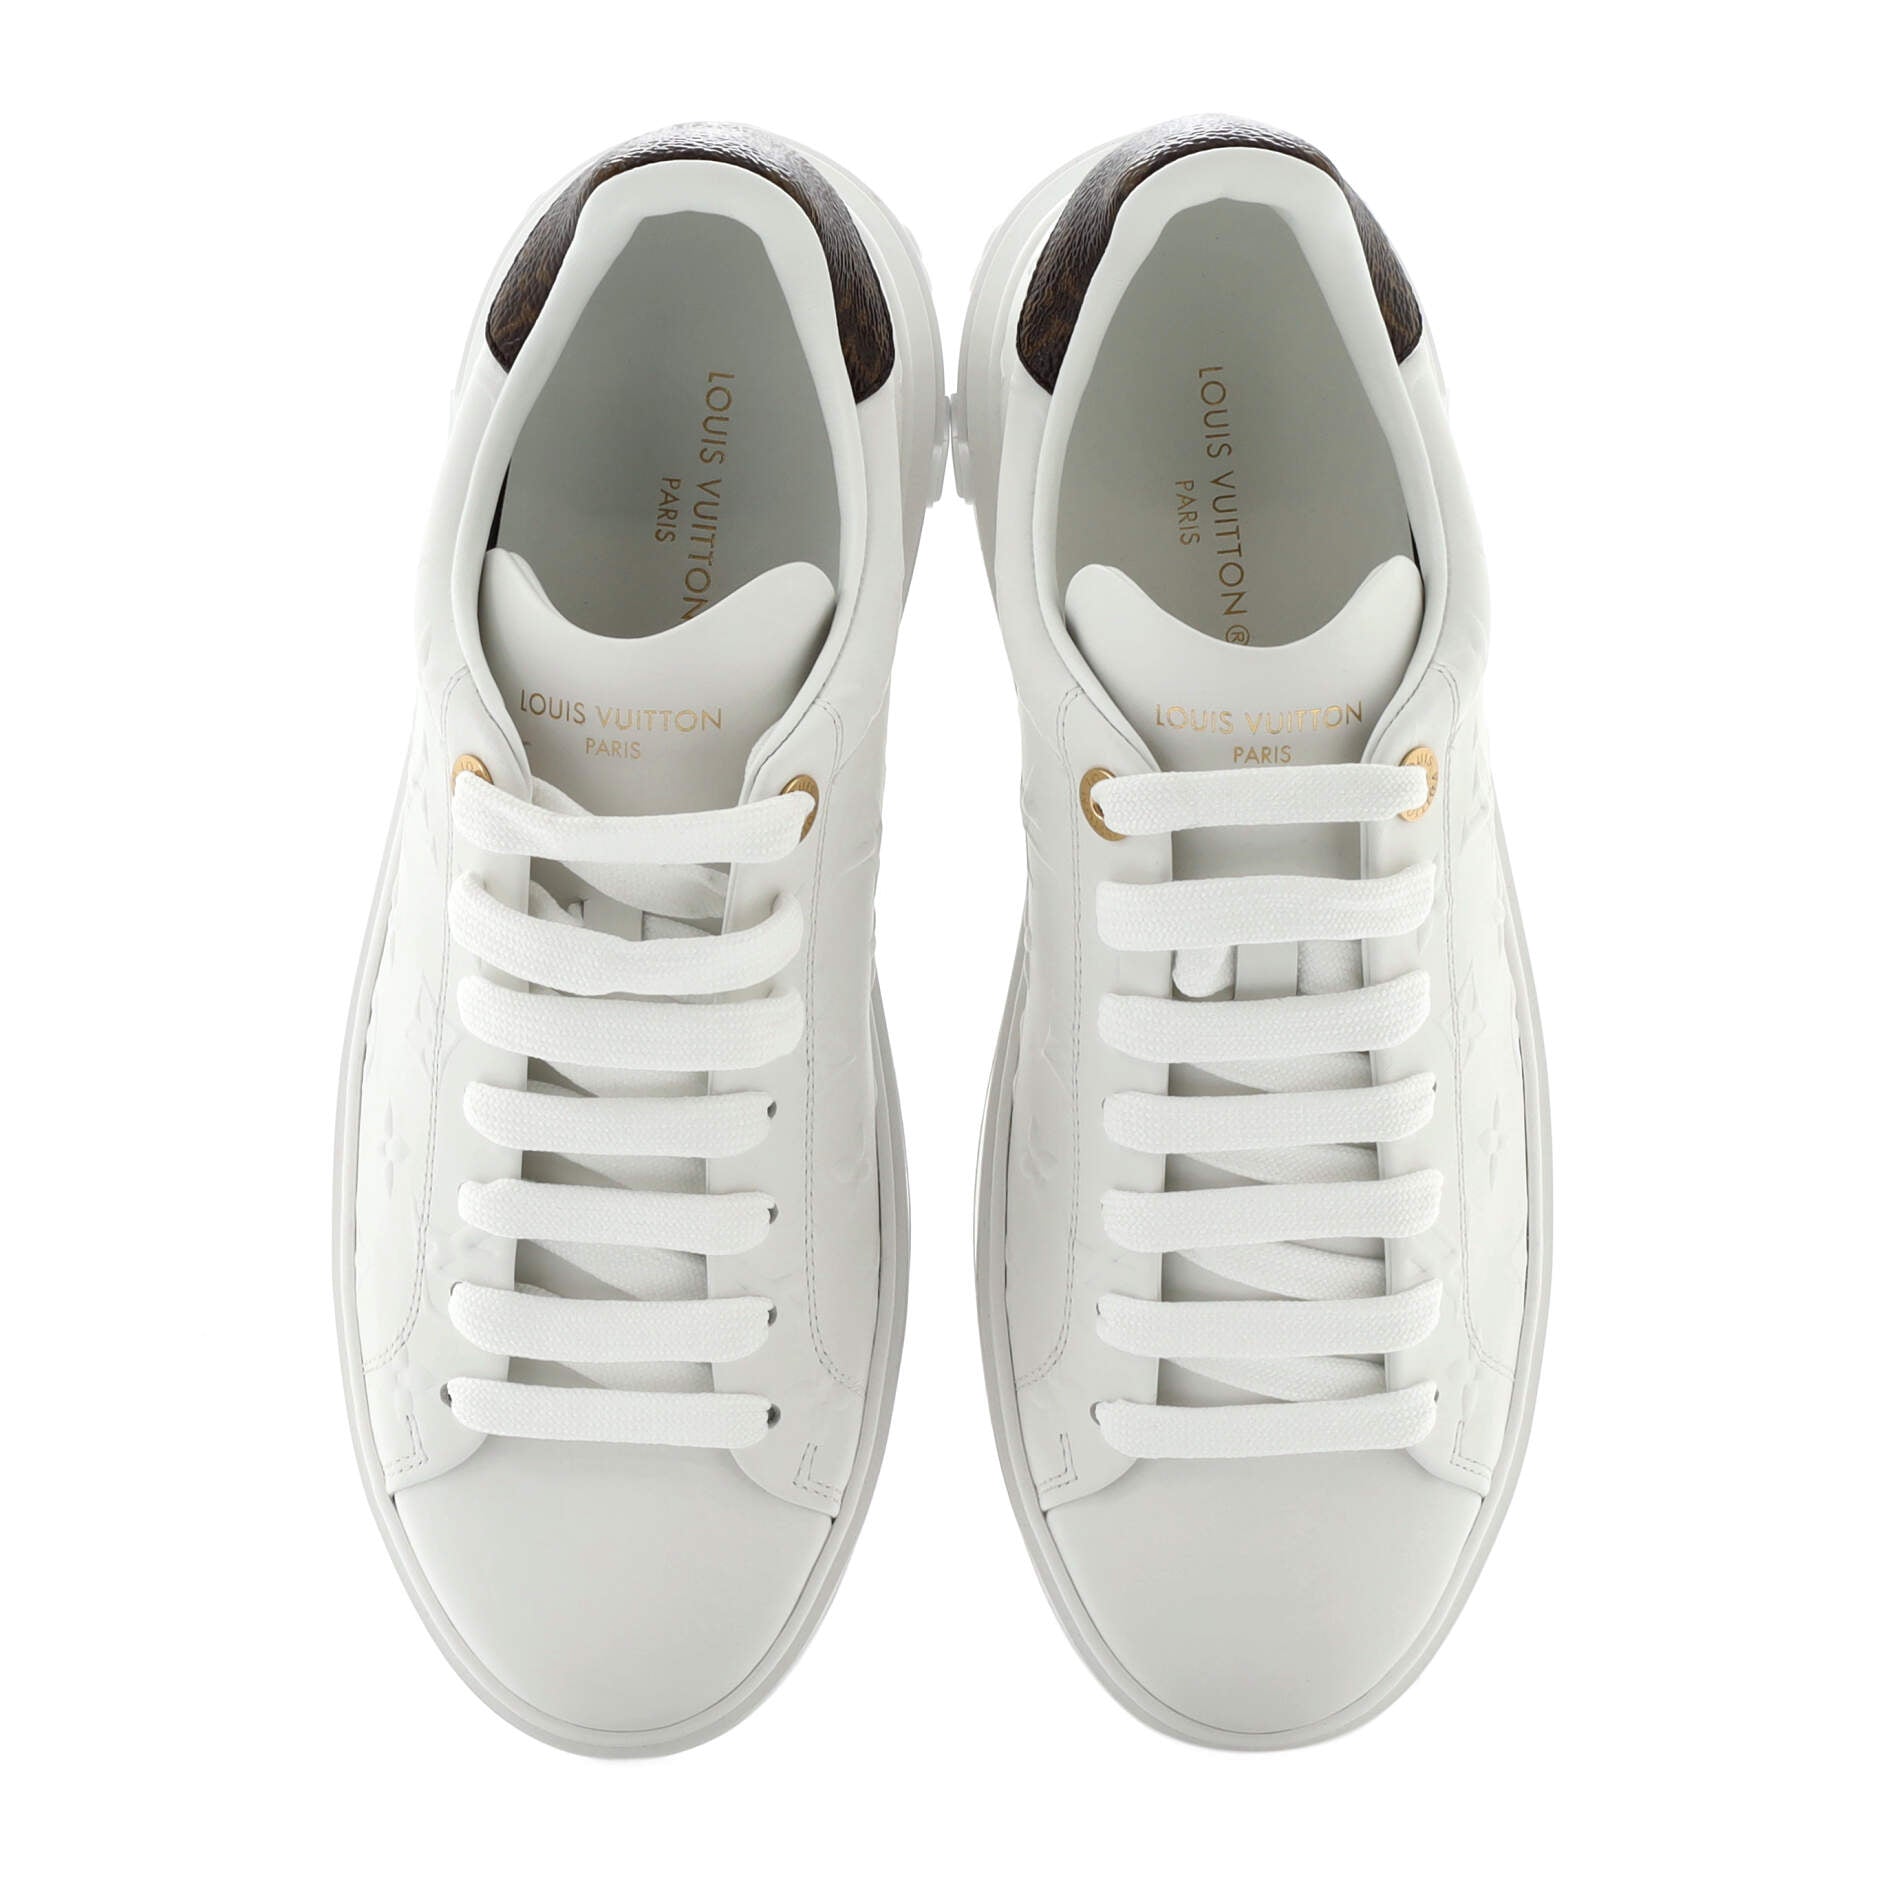 Louis Vuitton Women's White Leather Sneakers With Monogram Print